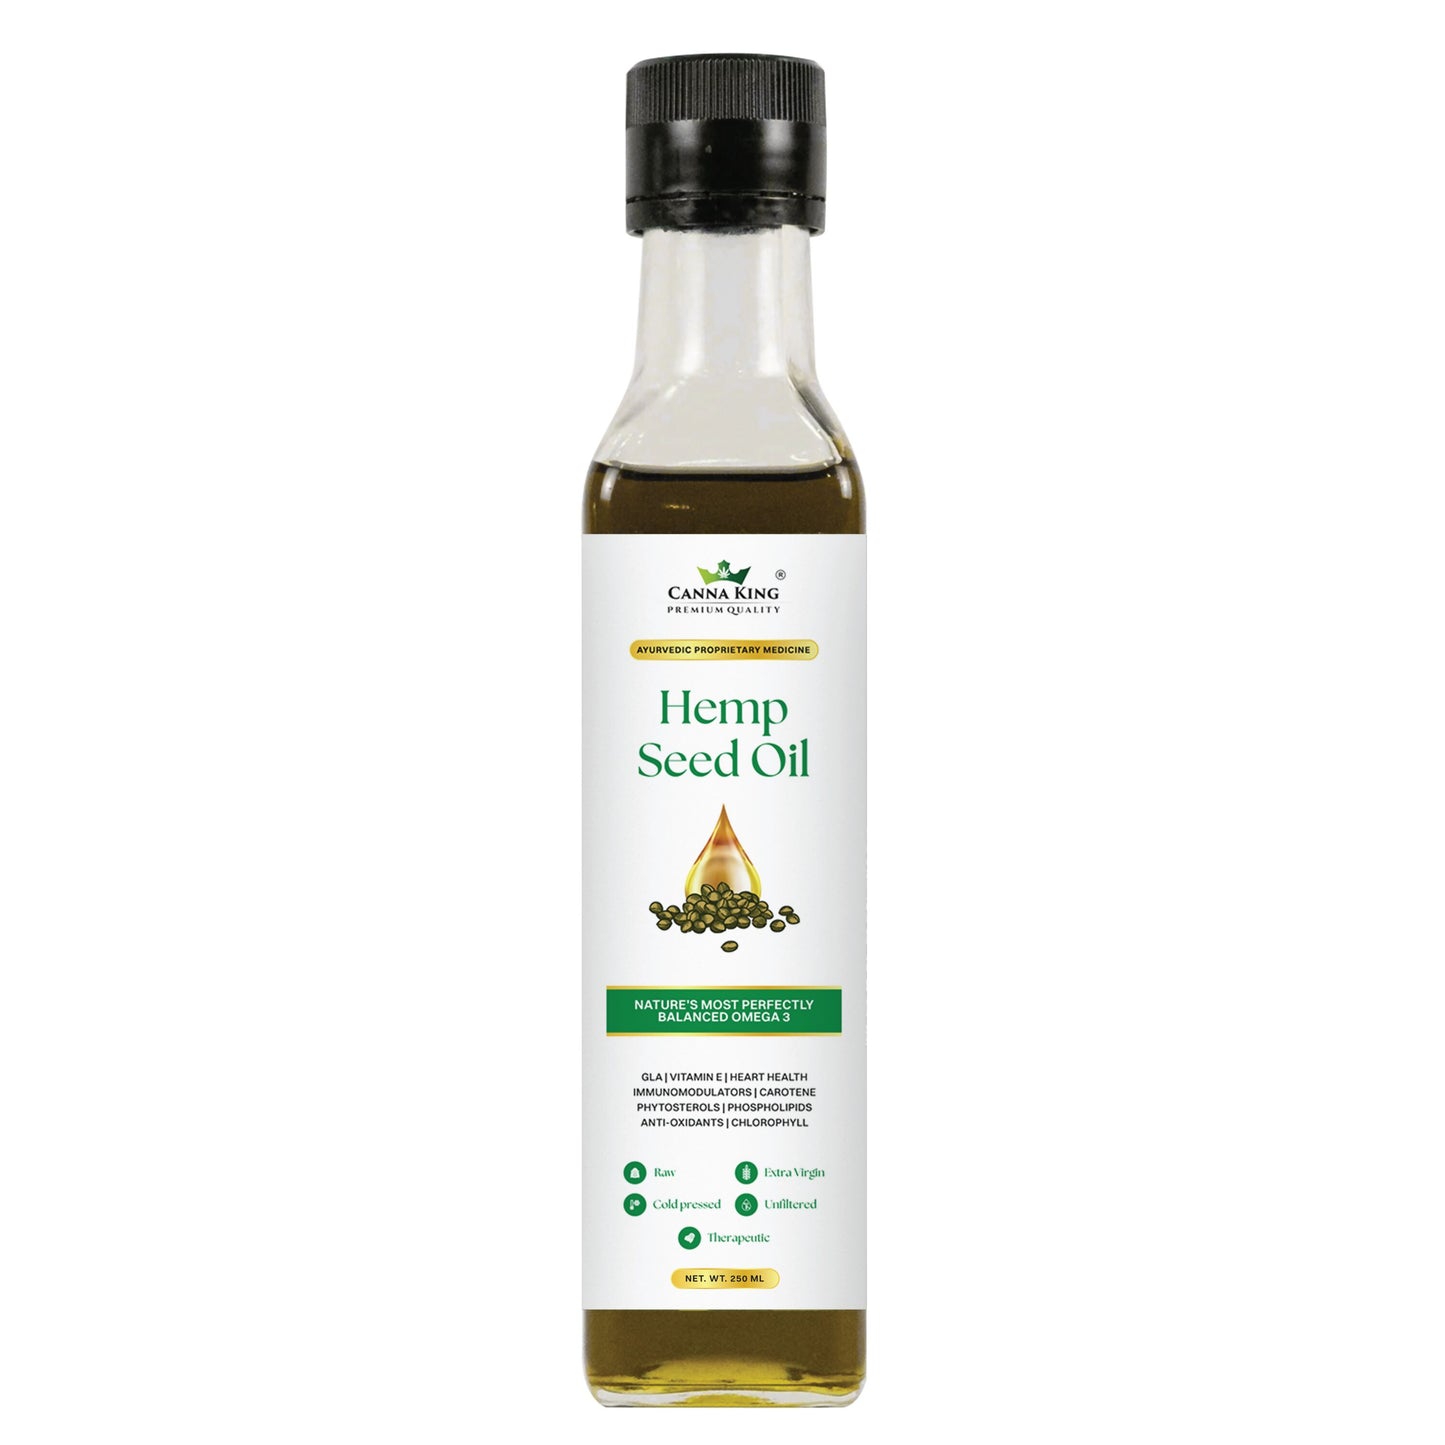 Cannaking - Hemp Seed Oil